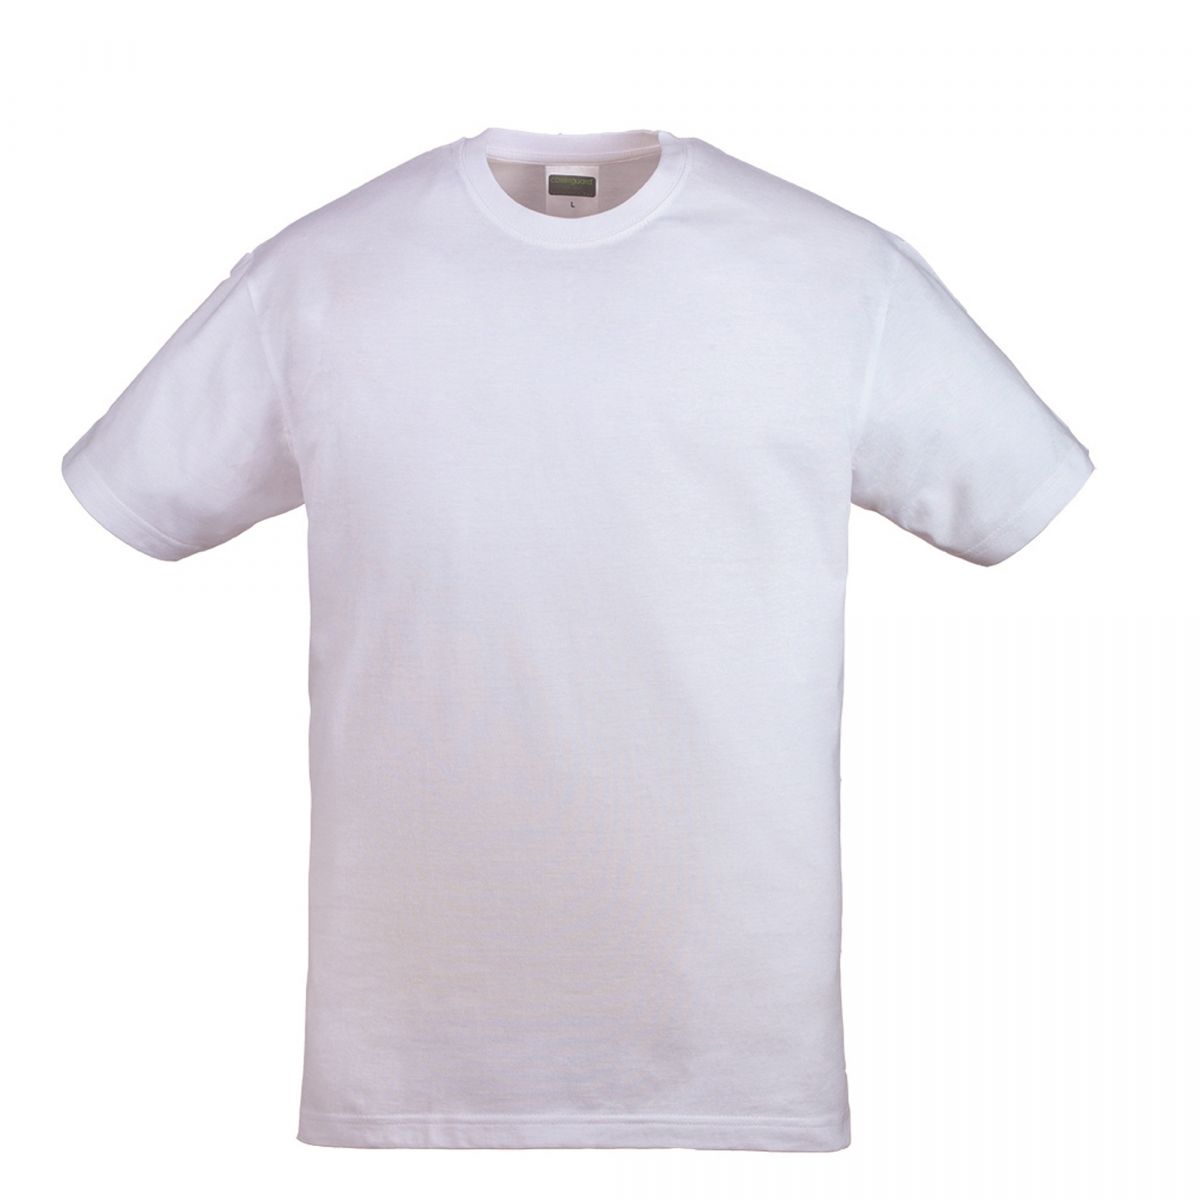 HIKE T-shirt MC blanc, 100% coton, 190g/m² - COVERGUARD - Taille S 0